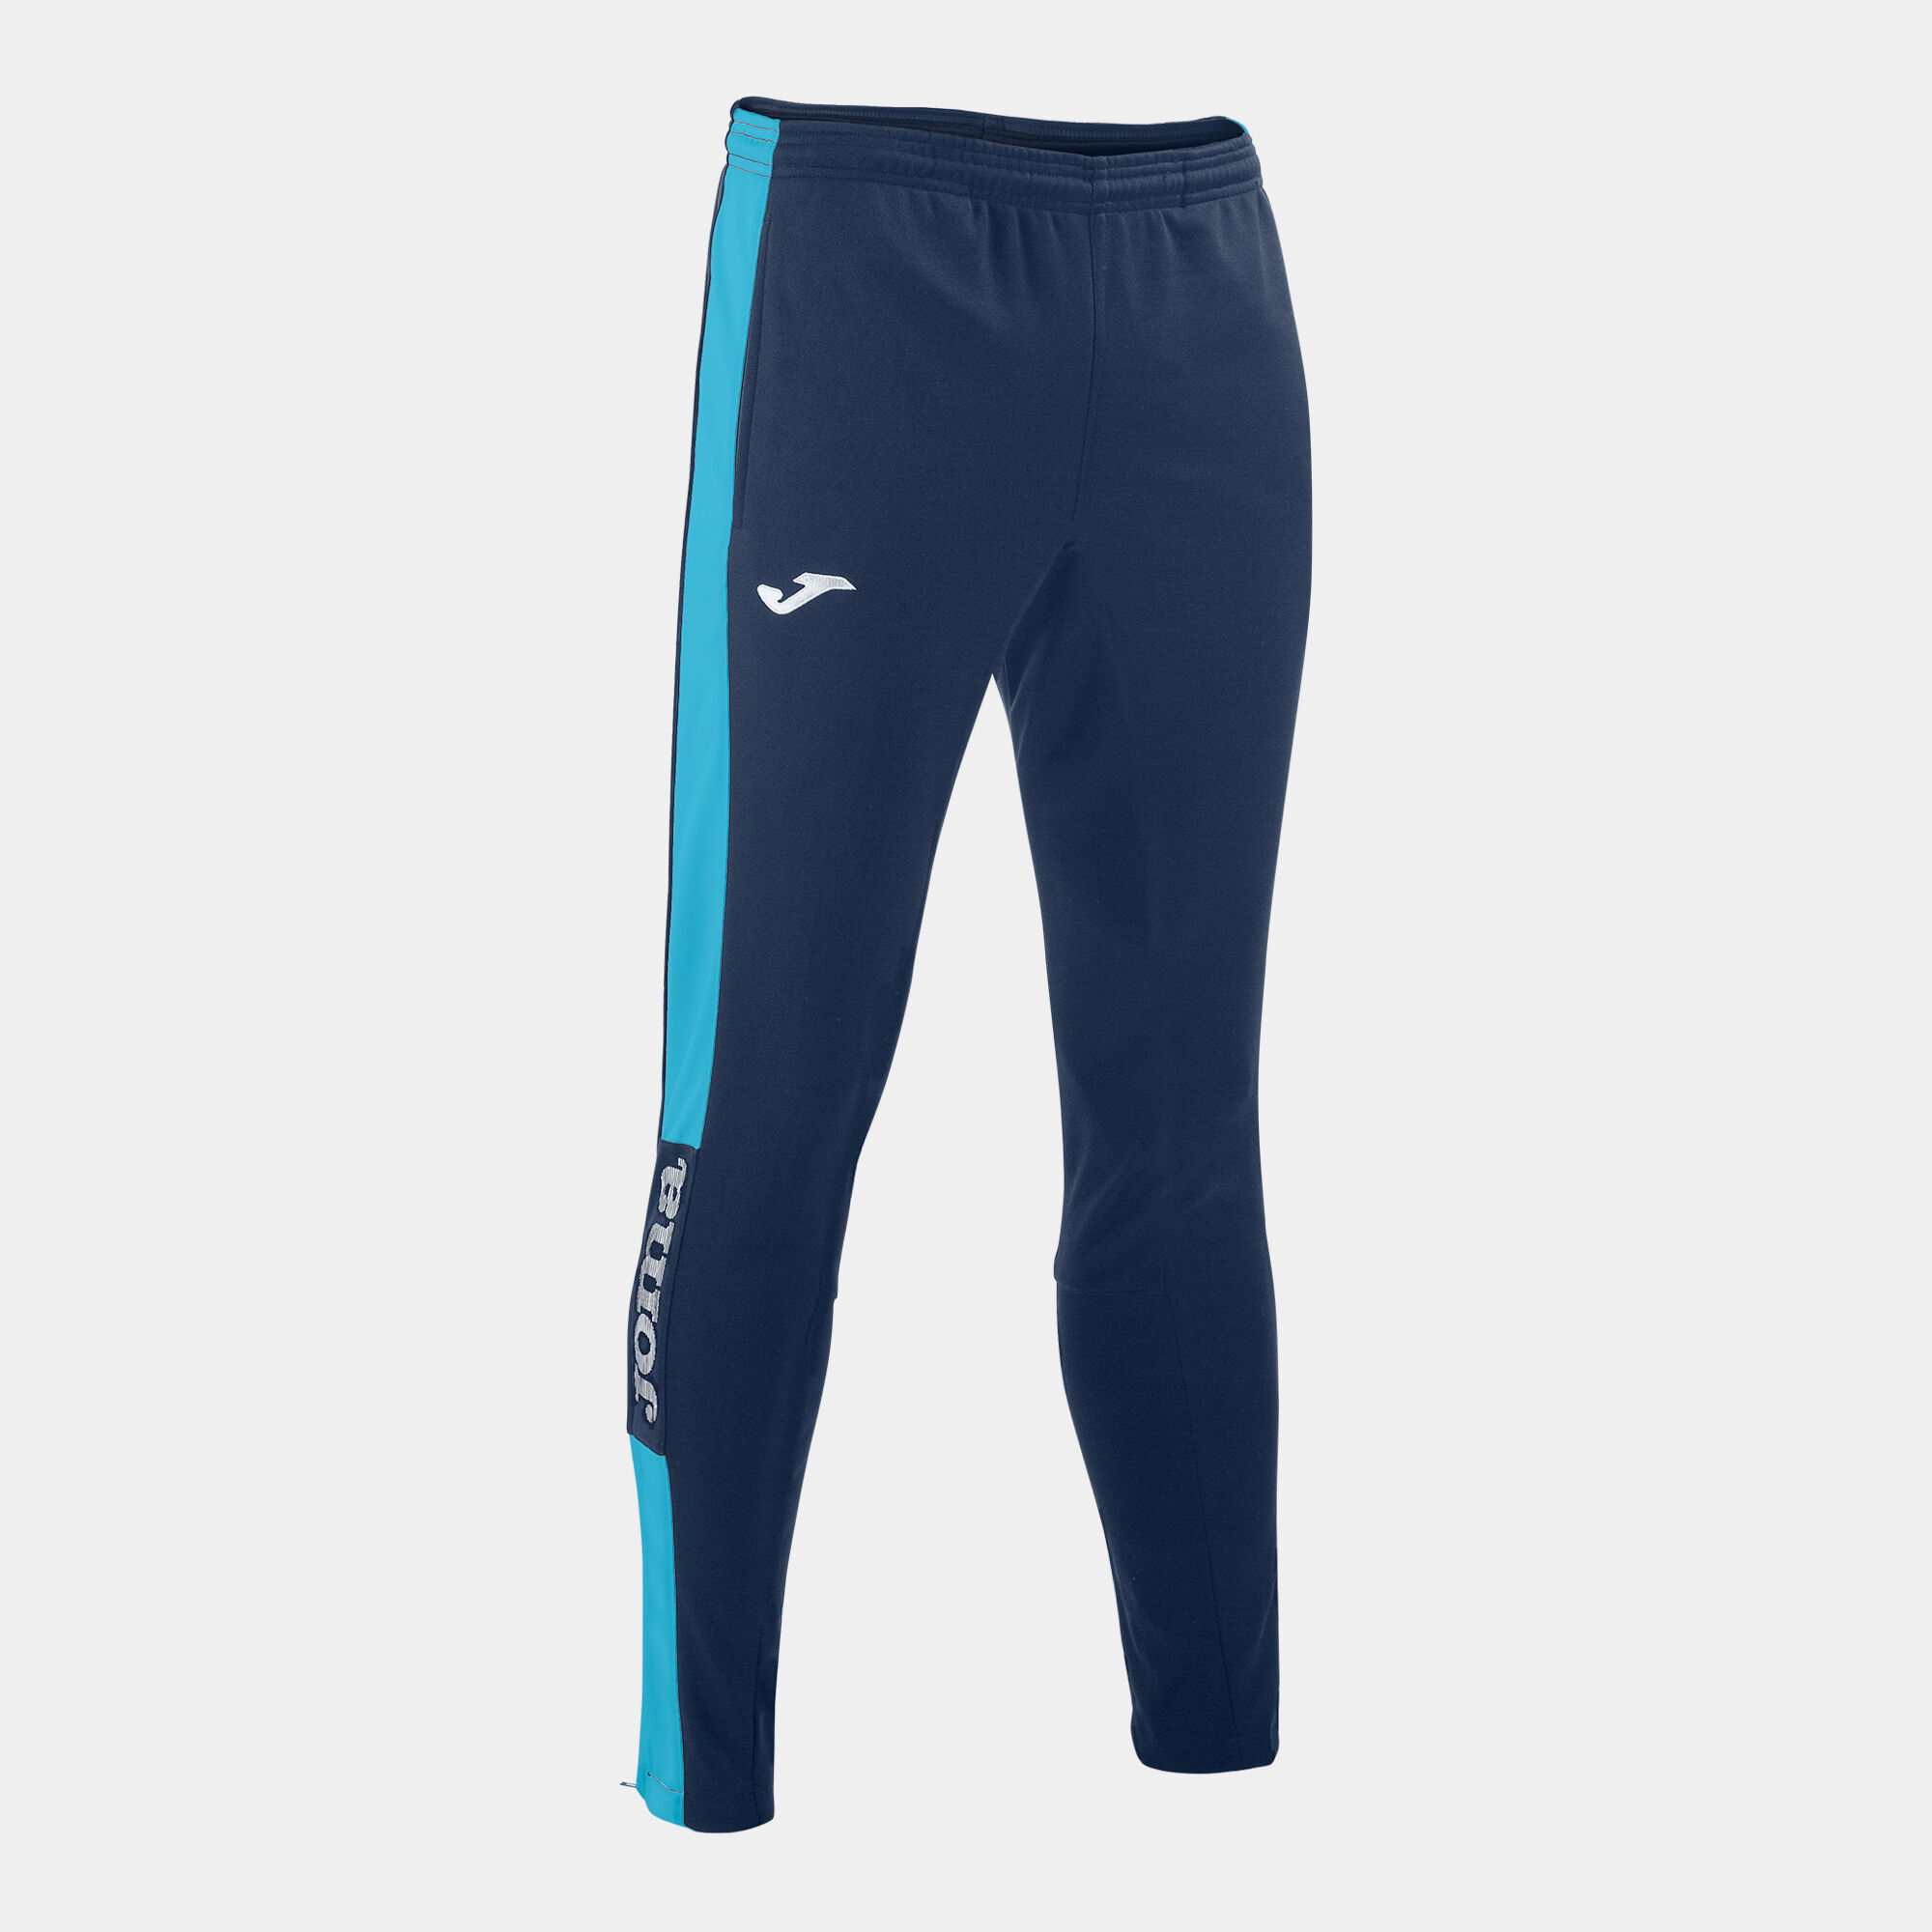 Pantalone lungo uomo Championship IV blu navy turchese fluorescente